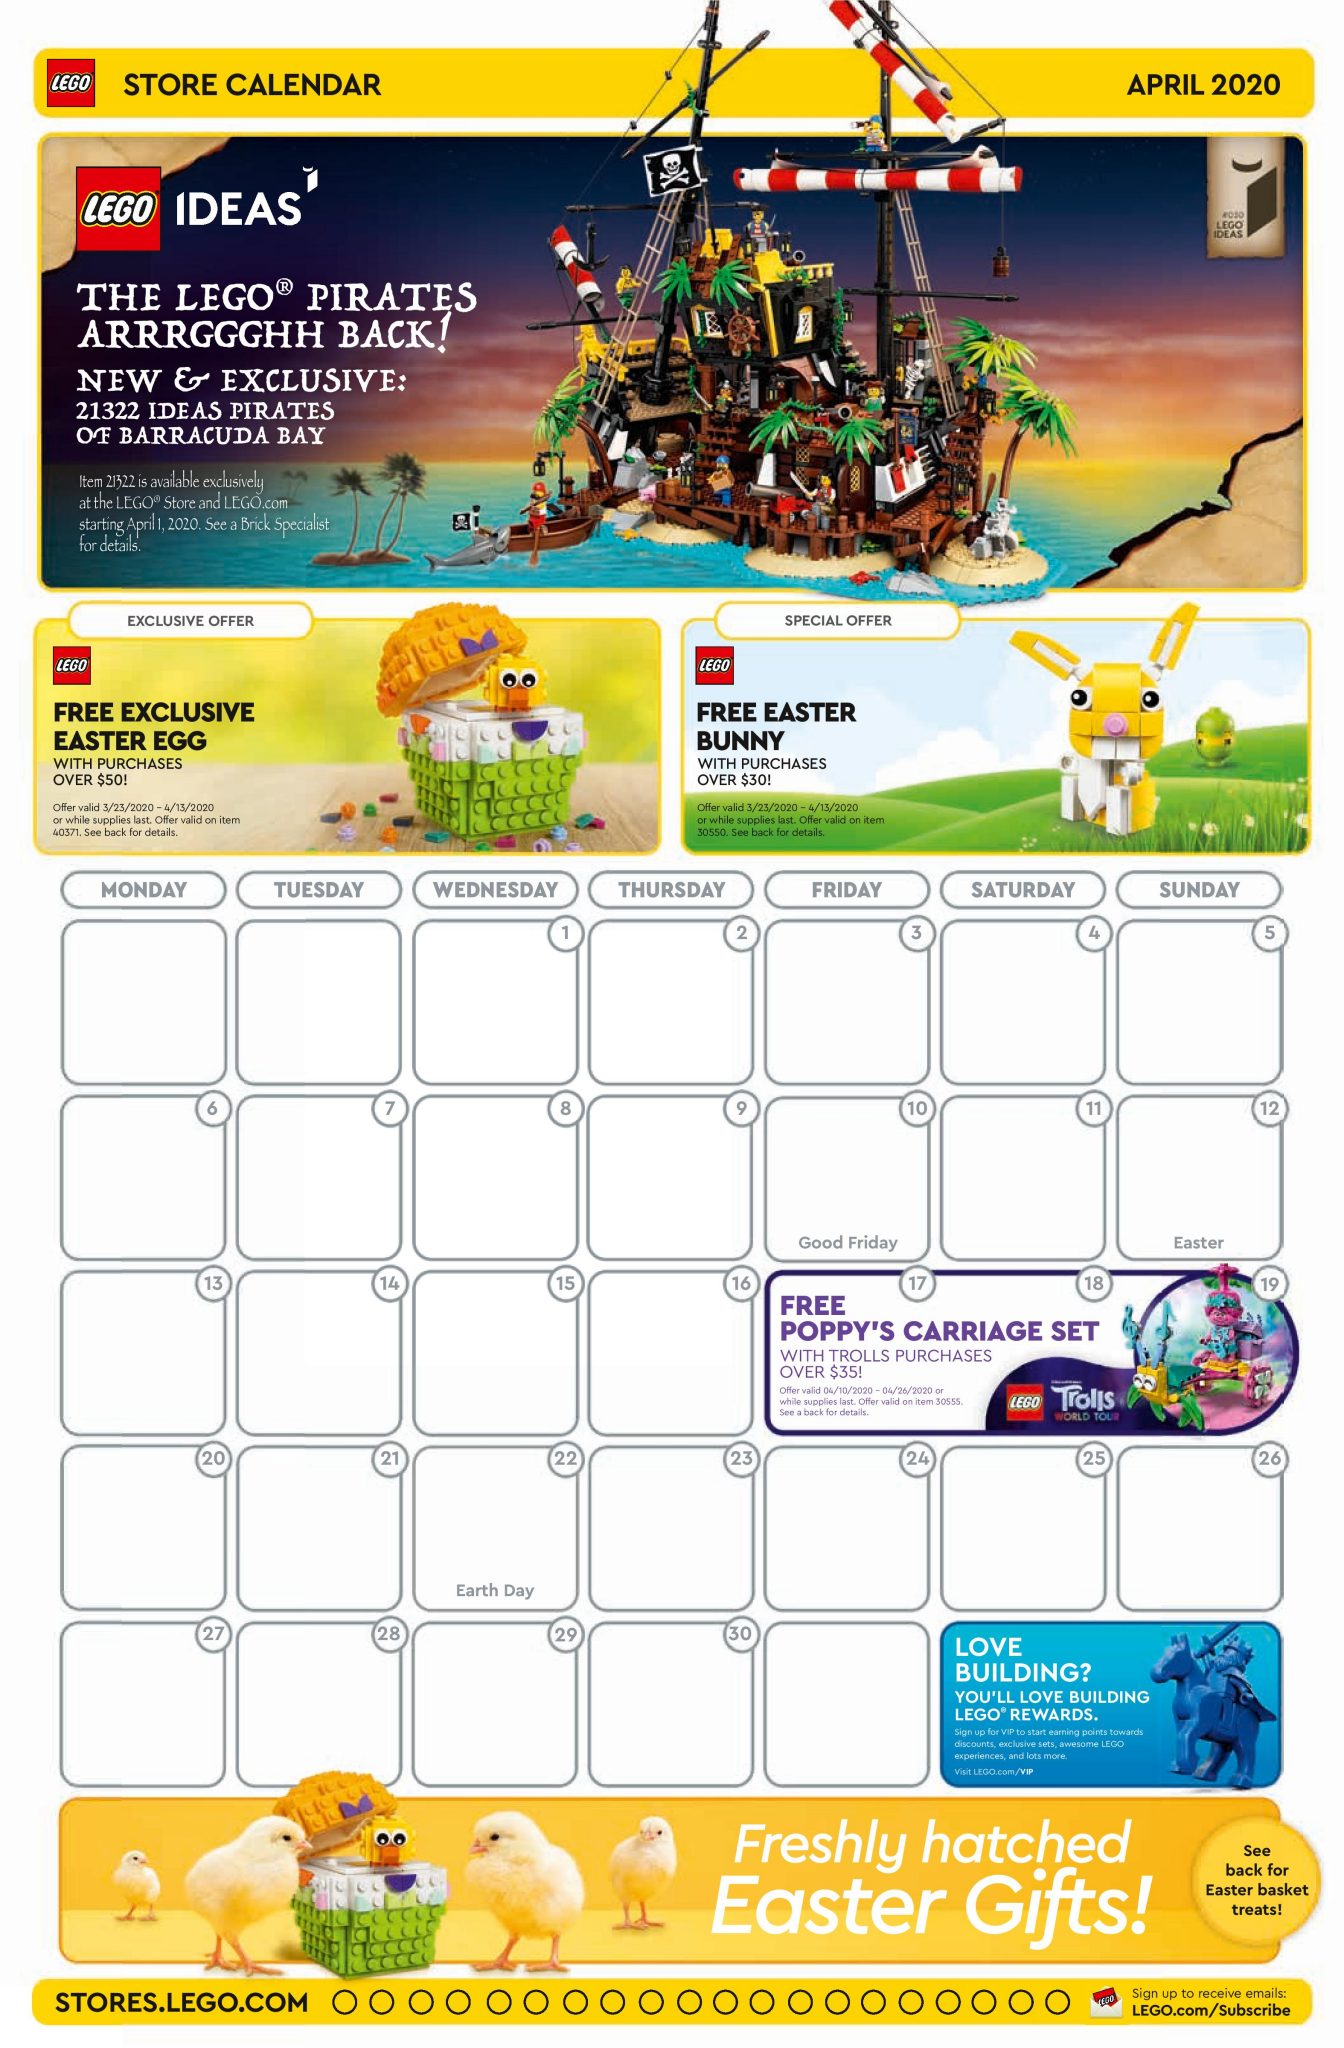 LEGO April 2020 Store Calendar Promotions & Events The Brick Fan